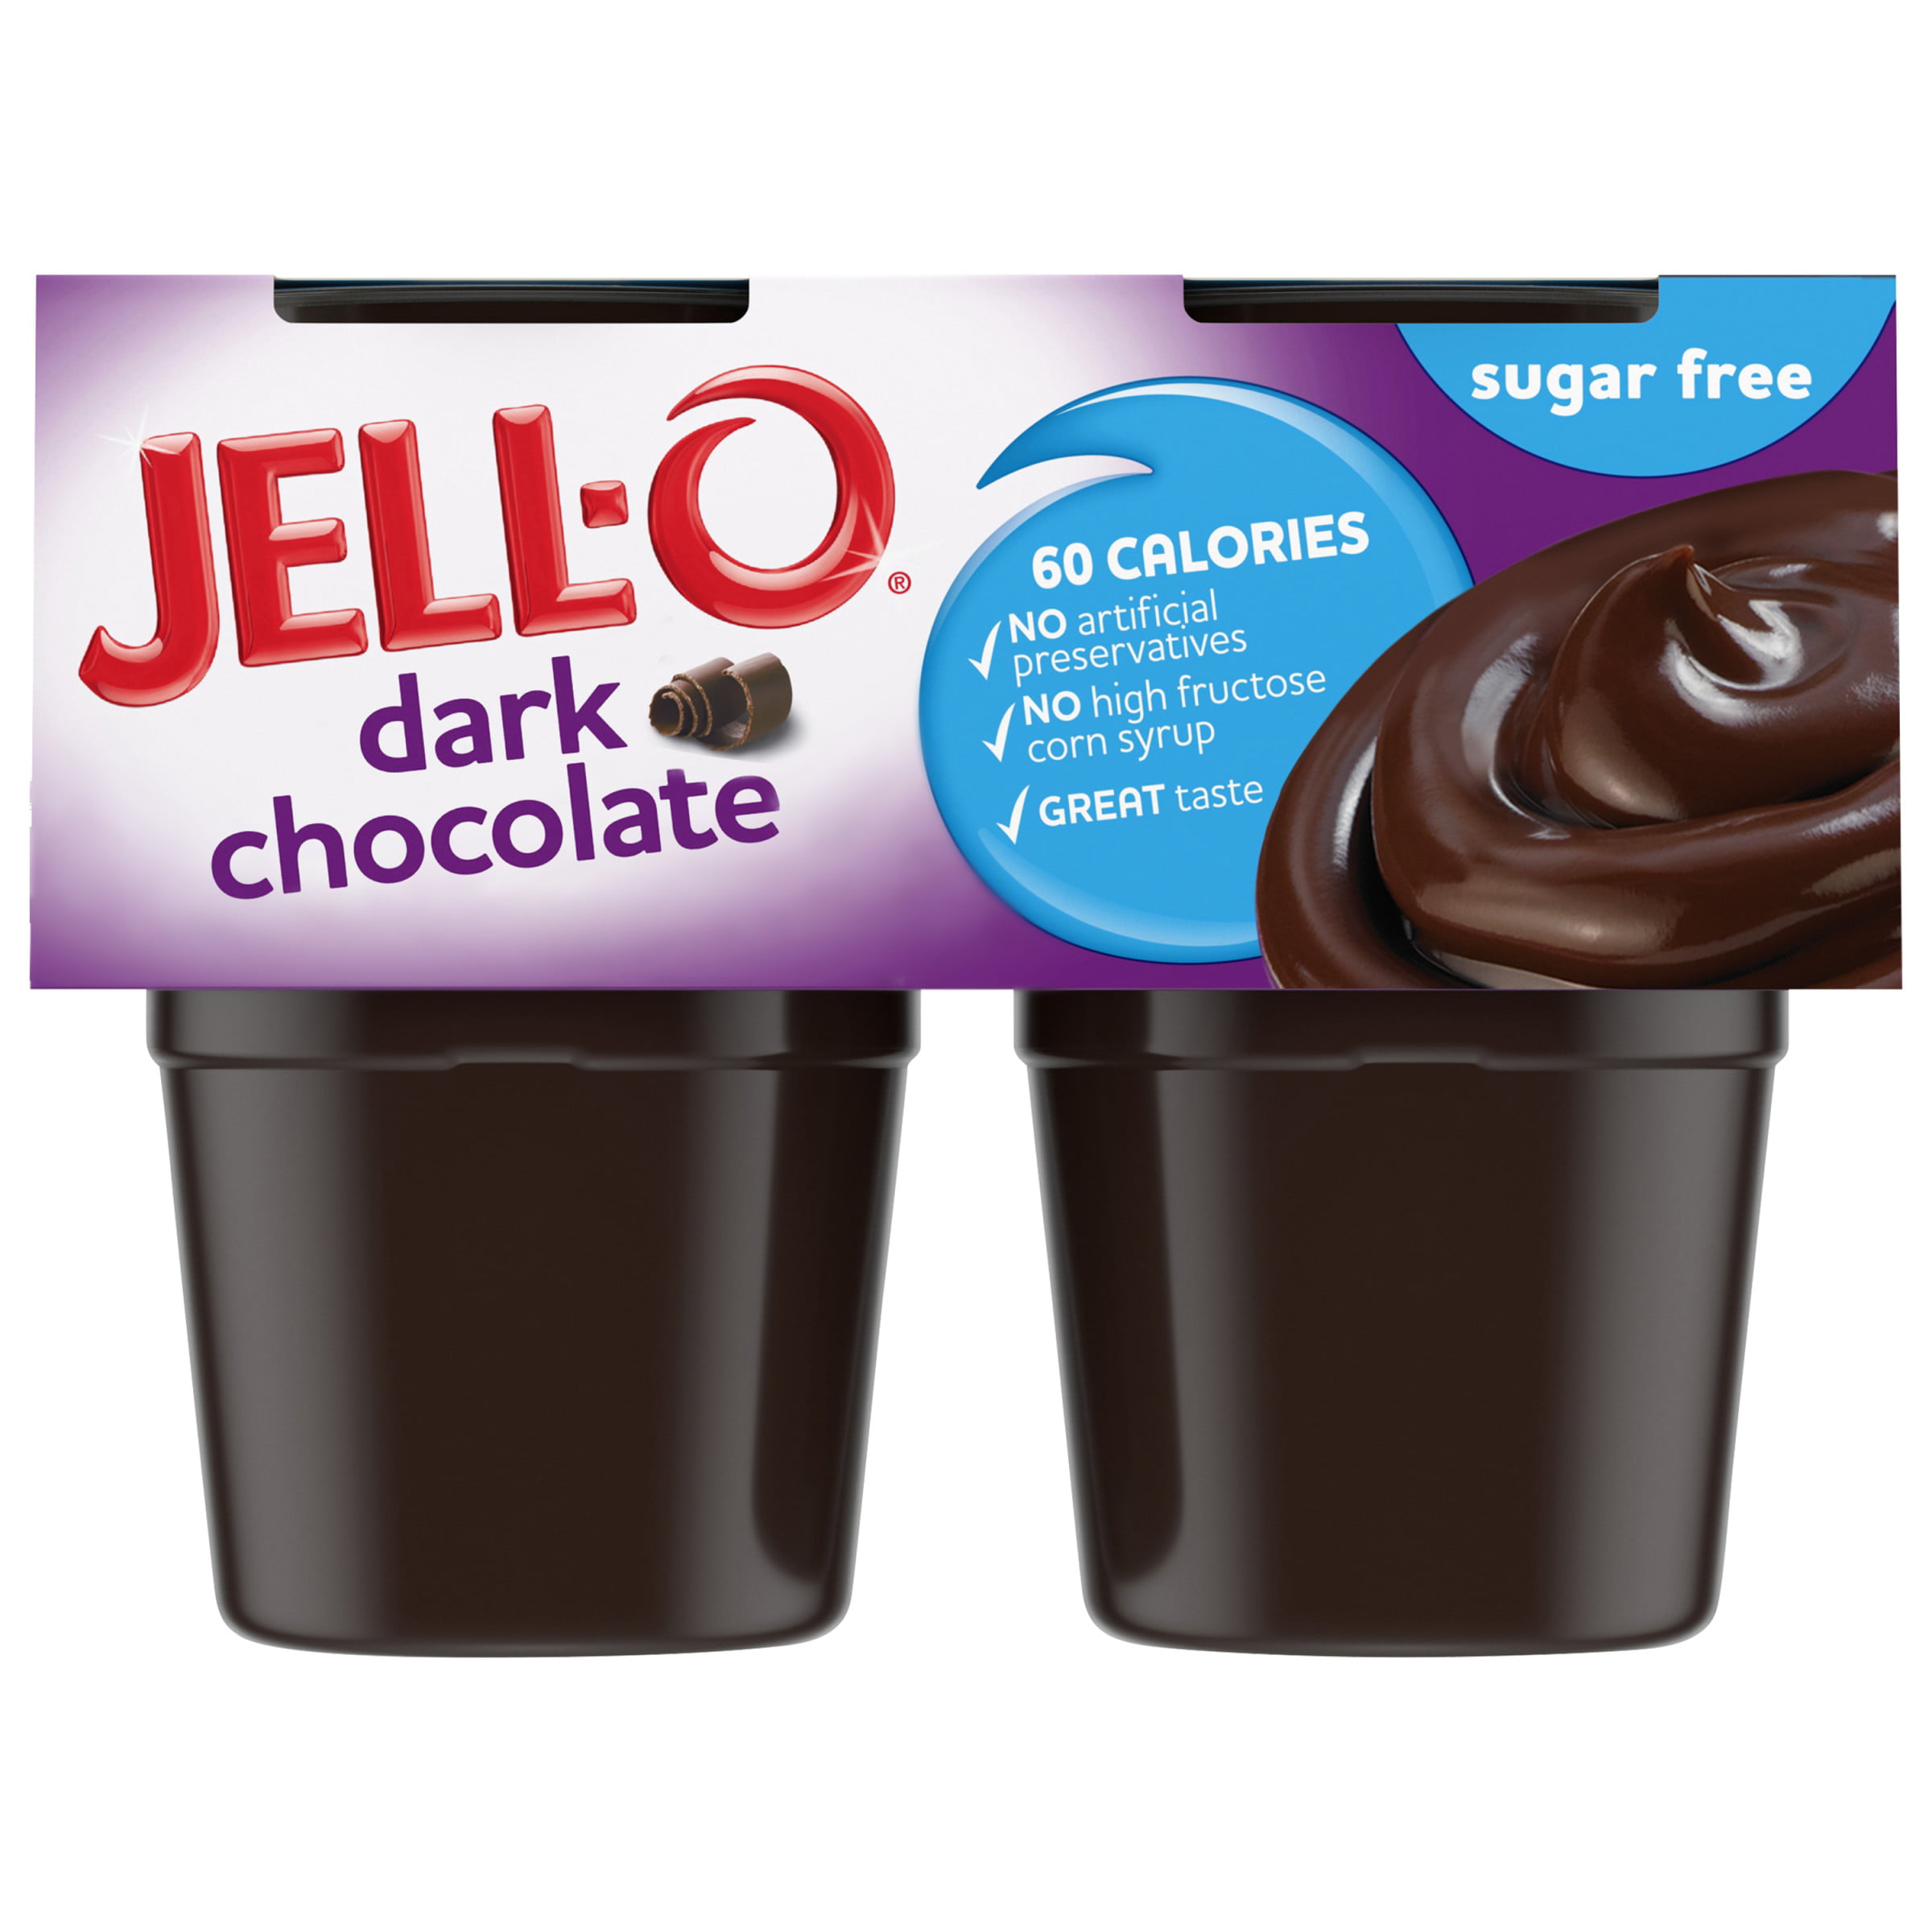 Jell-O Dark Chocolate Sugar Free Ready-to-Eat Pudding Snacks, 4 ct Cups - Walmart.com - Walmart.com